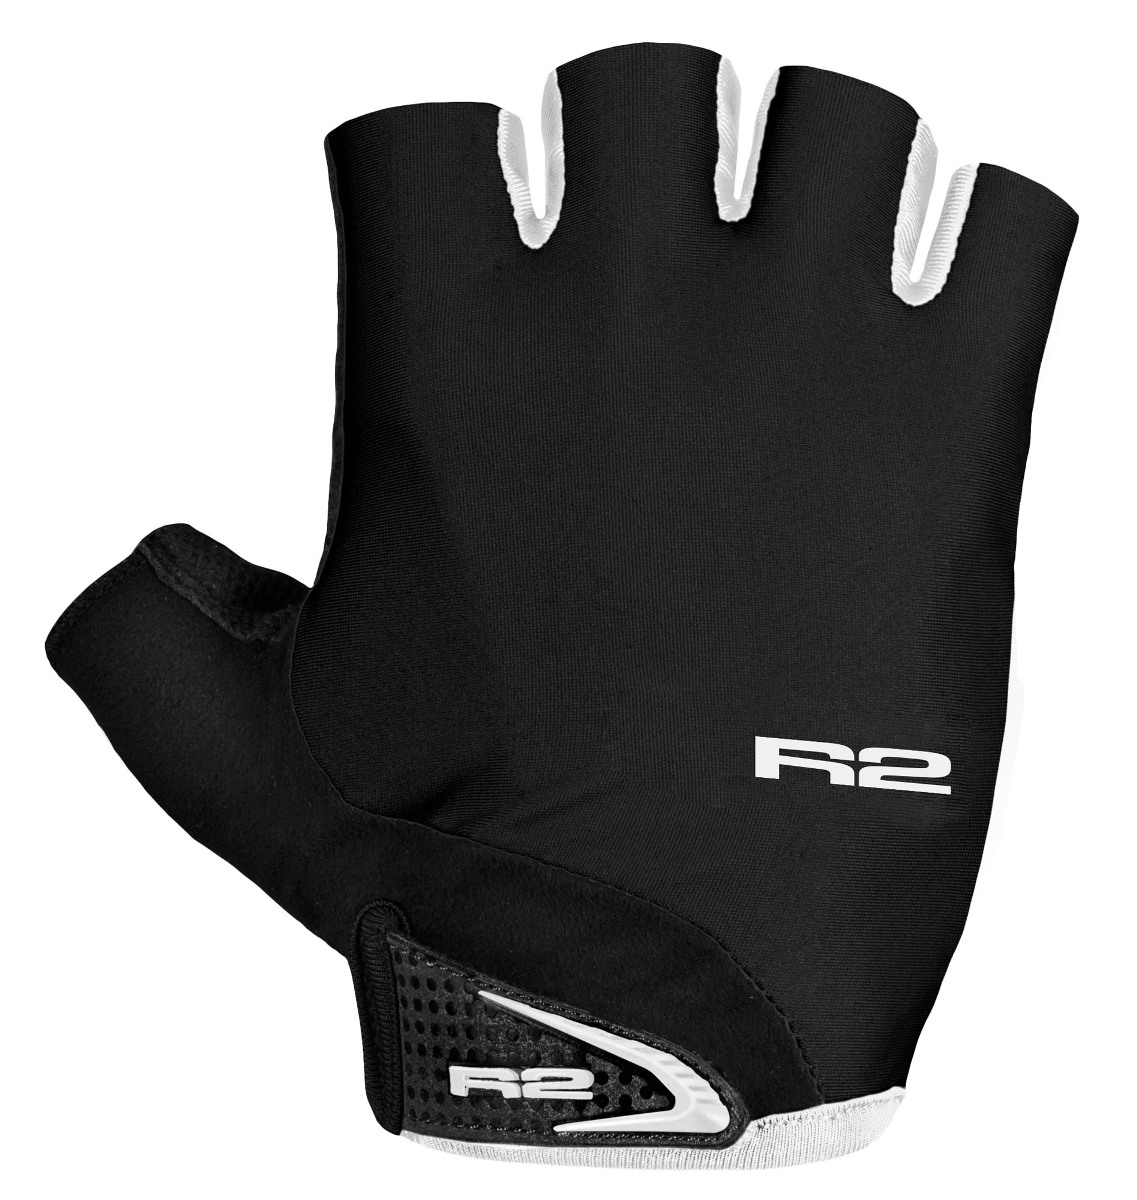 Cyklistické rukavice R2 Riley, čierne/biele